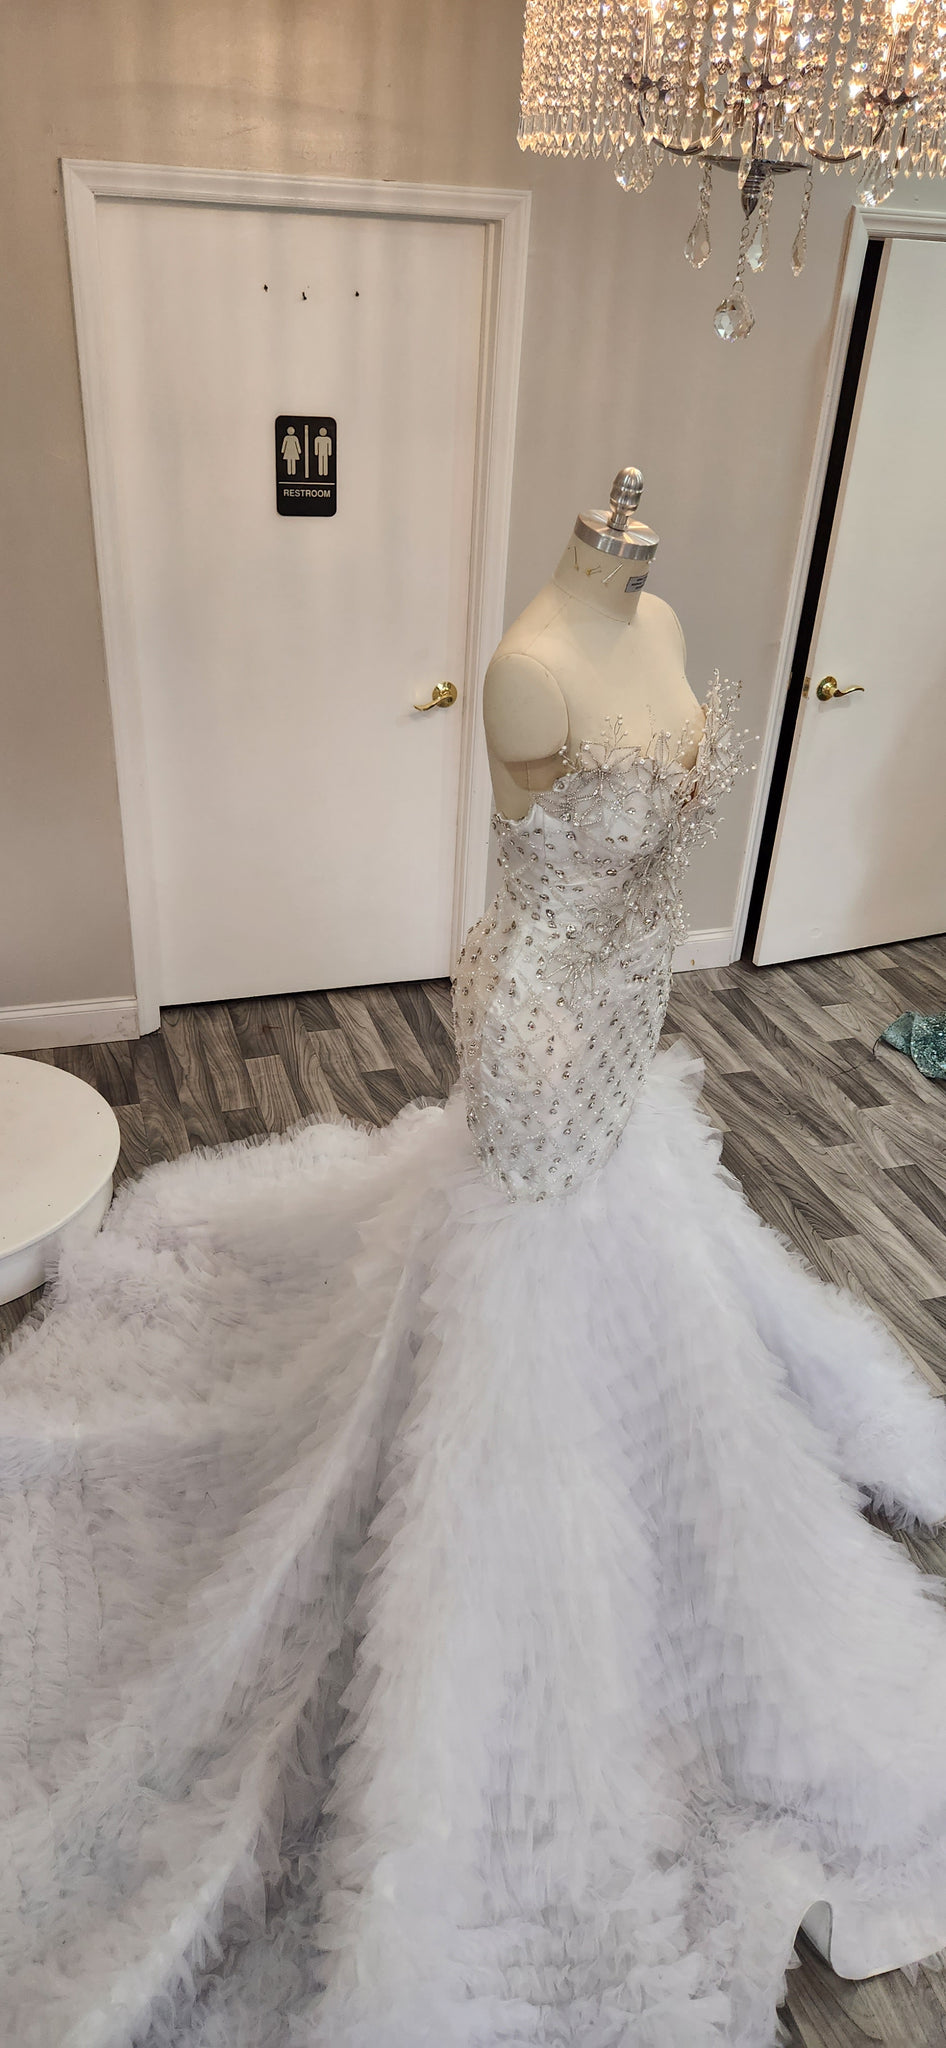 3D APPLIQUE WEDDING DRESS